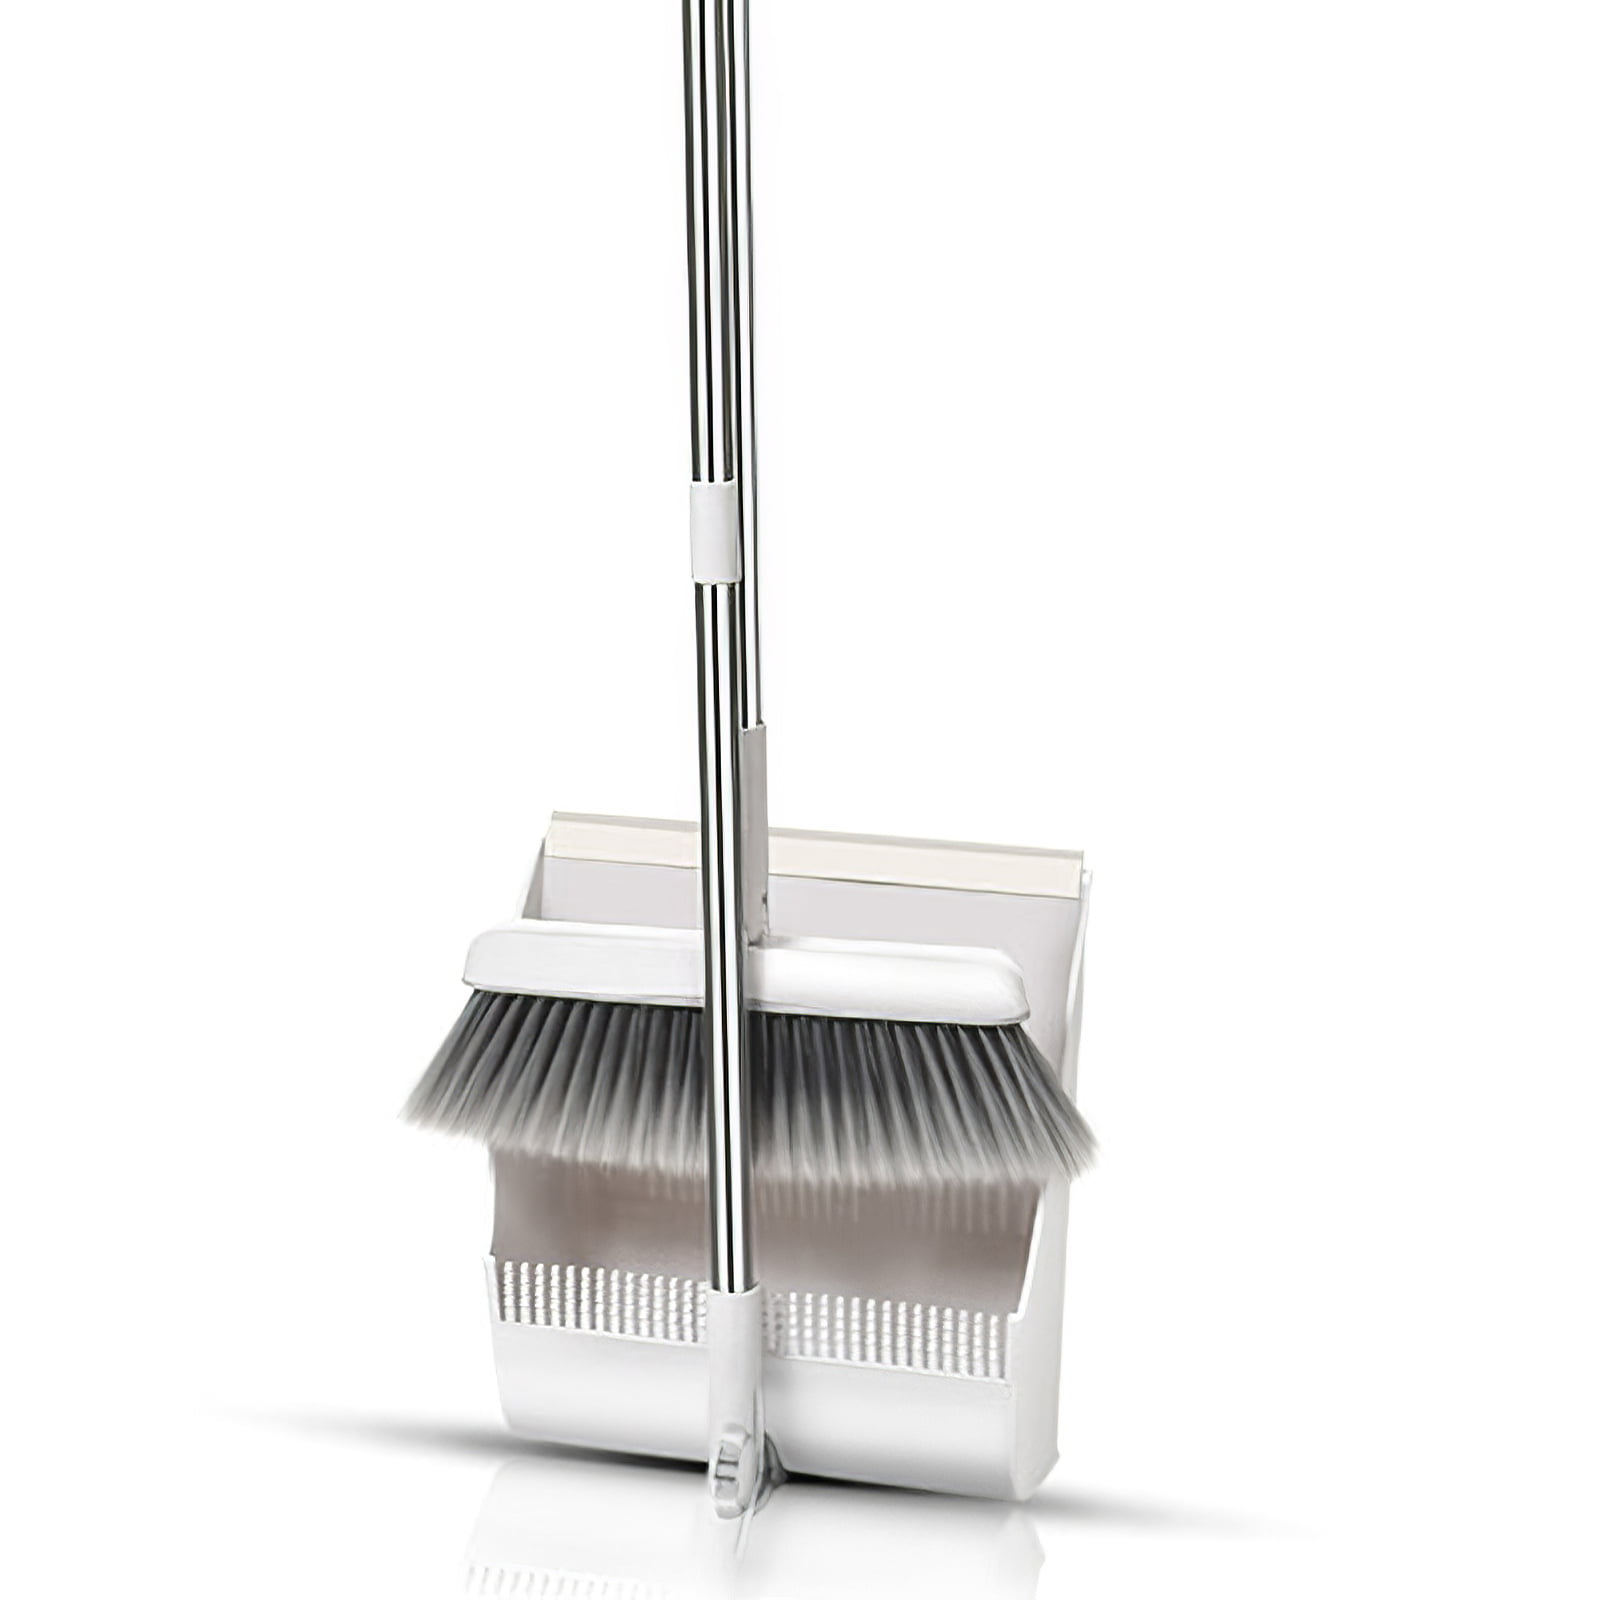 YoL Long handle handheld dustpan & brush 4 piece set sweeping cleaning home blue